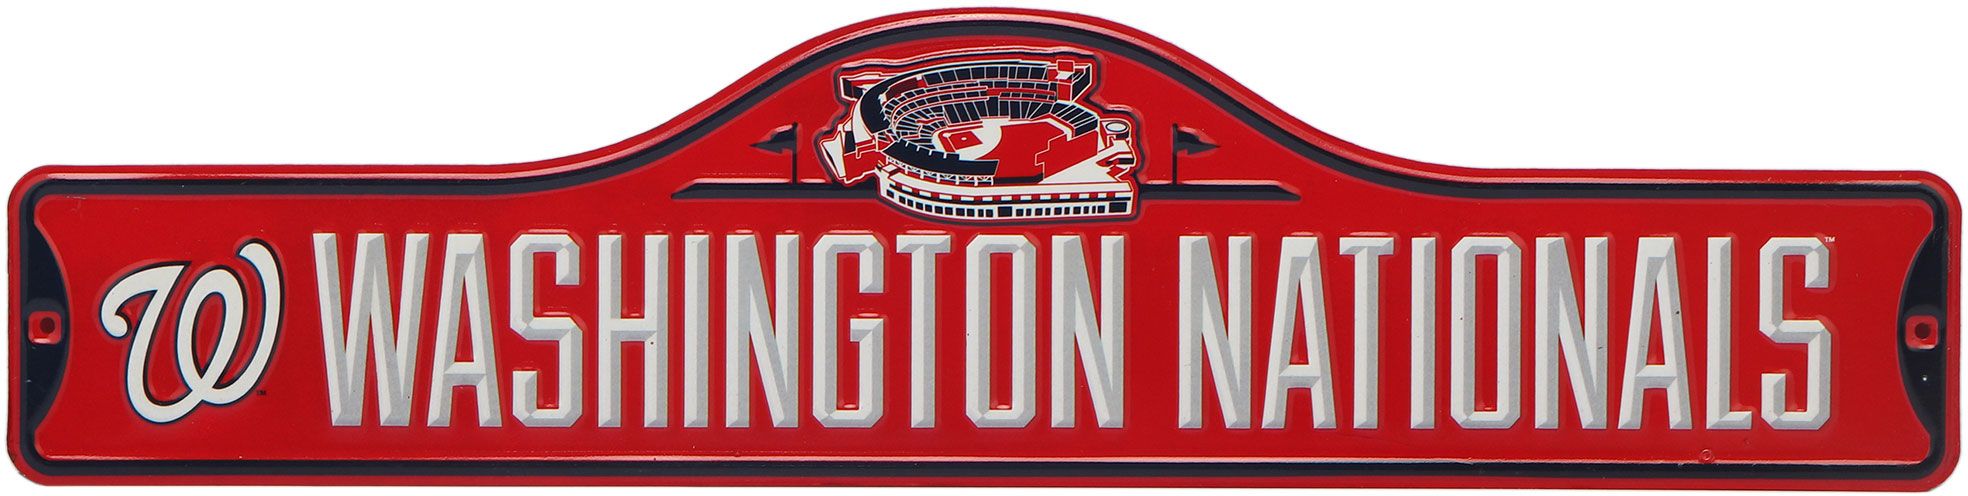 Open Road Brands Washington Nationals Red Metal Street Sign